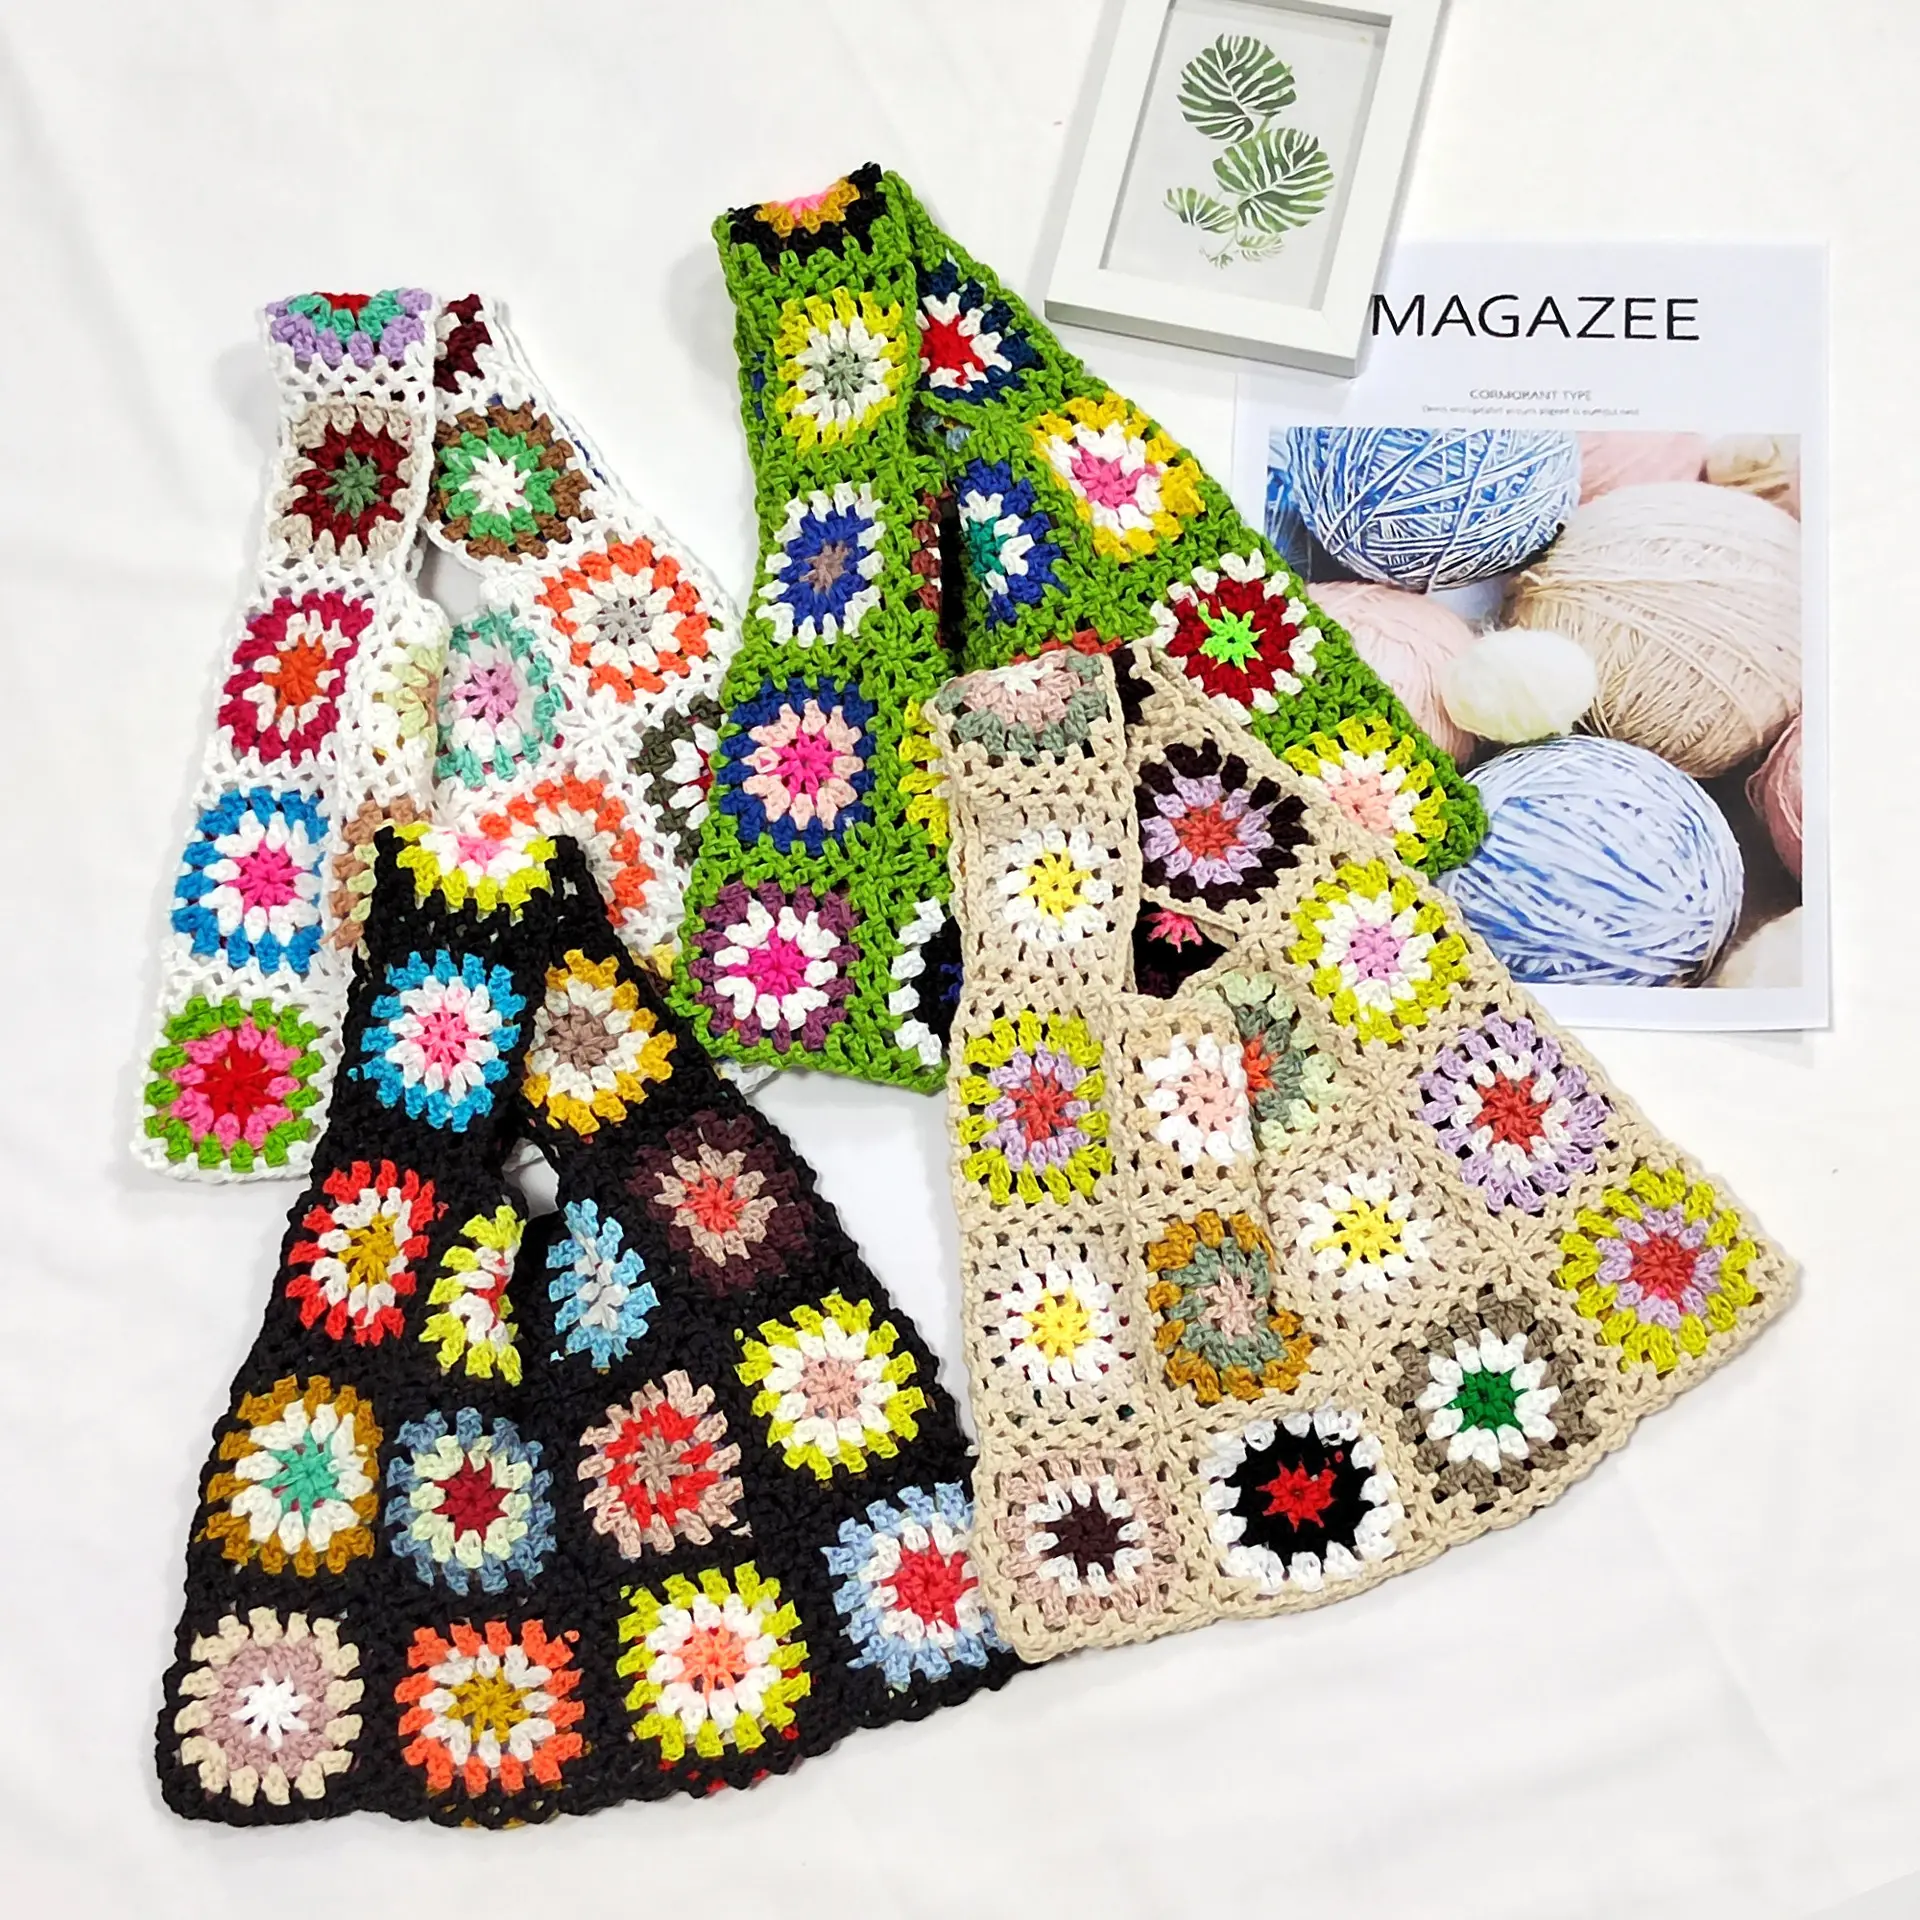 2022 Autumn Winter Women Fashion Accessories Exquisite Handmade Random Colors Flower Pattern Crochet Knit Hand Bag Tote Handbag